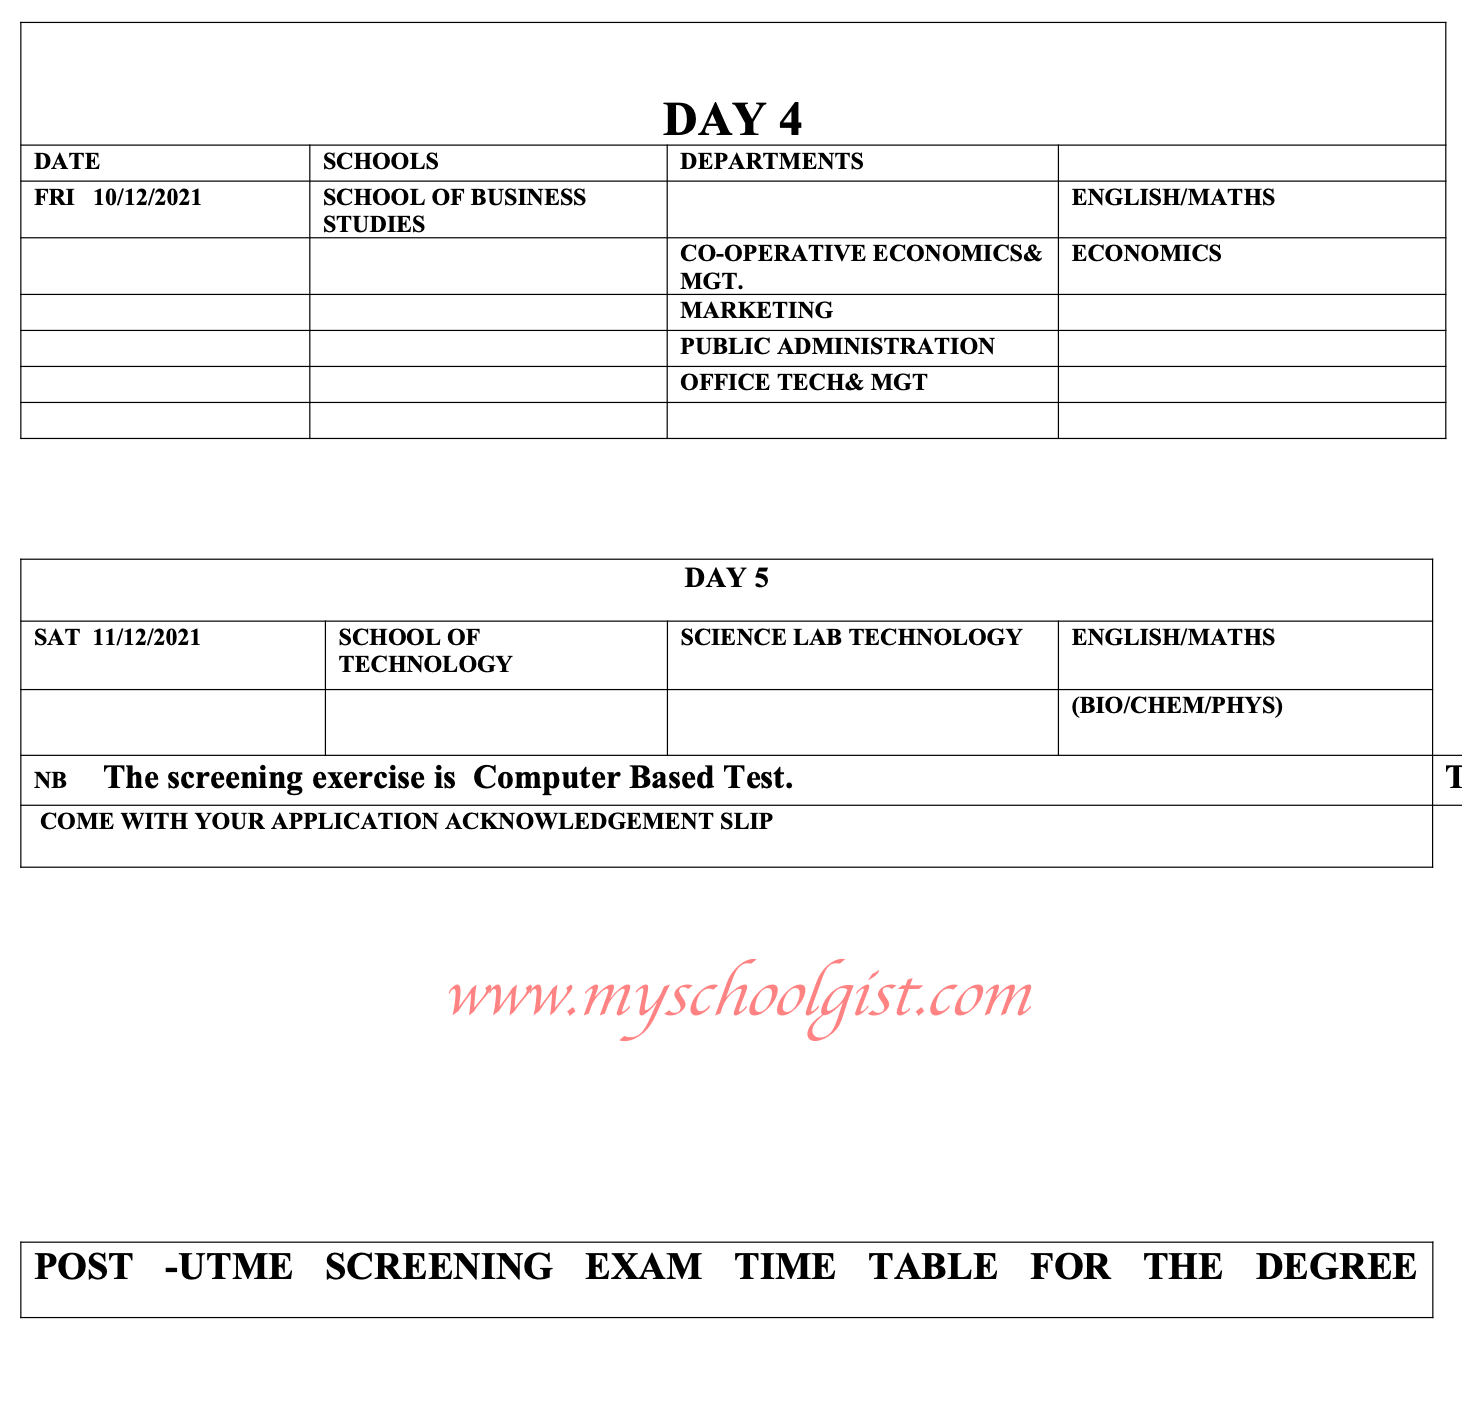 IMT Post UTME Screening Exam Timetable